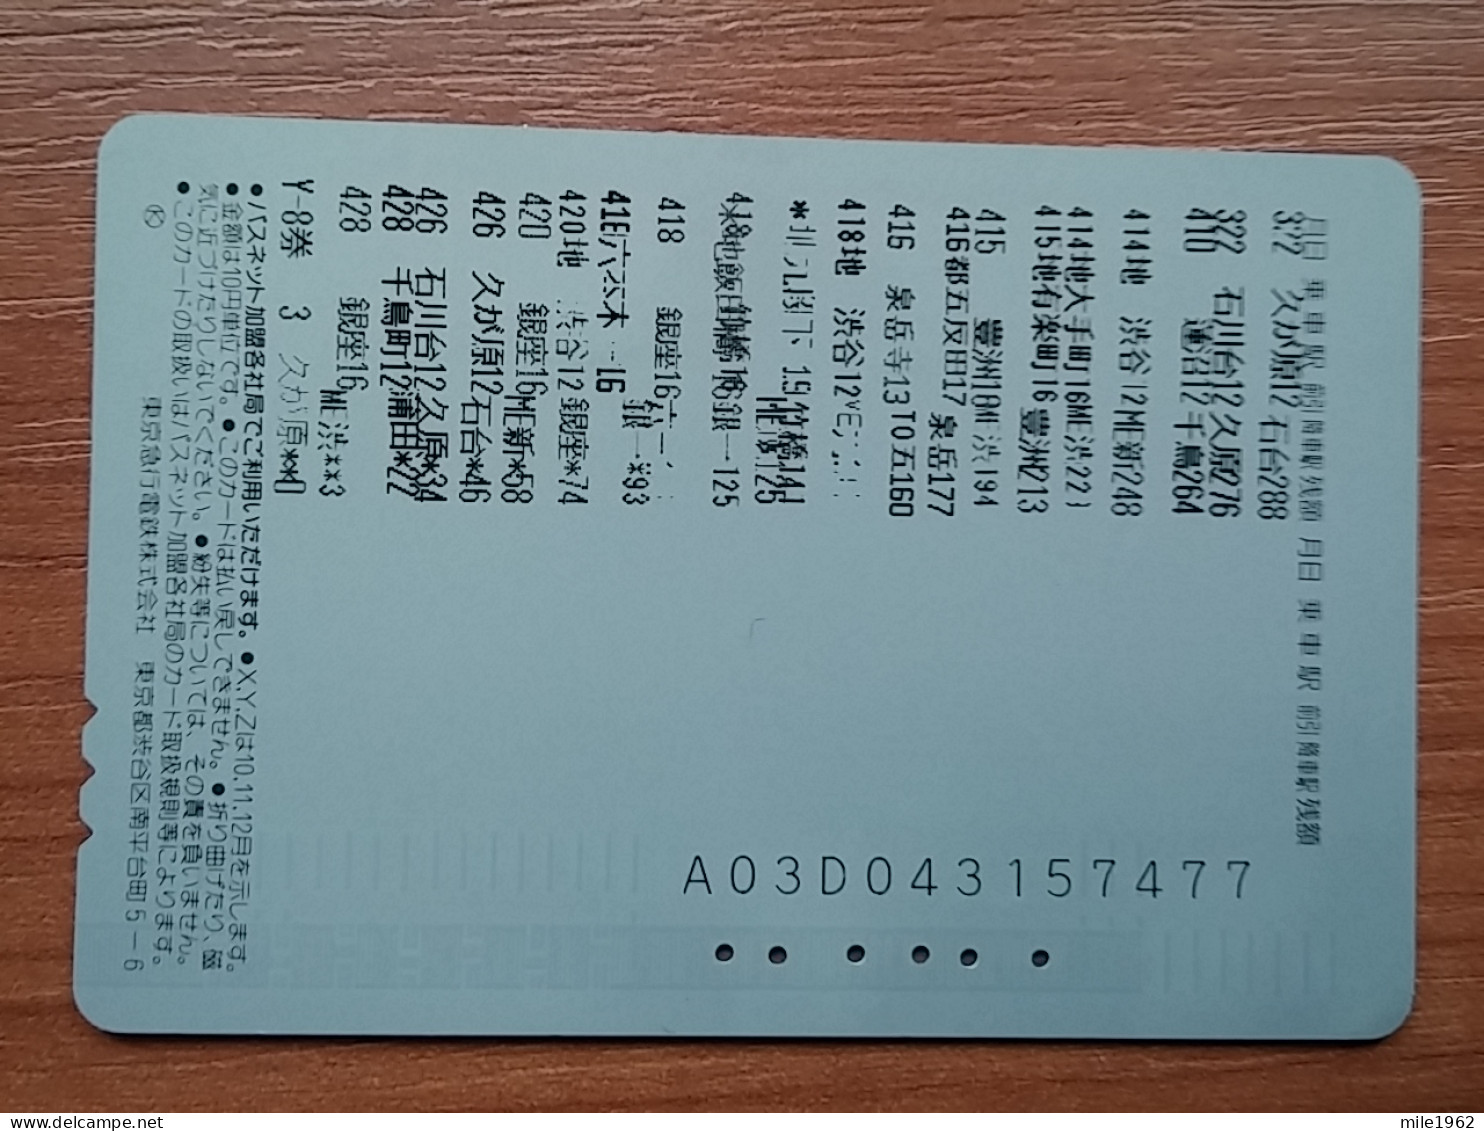 T-400 - JAPAN, Japon, Nipon, Carte Prepayee, Prepaid Card, Dog, Chien, NTT - Hunde